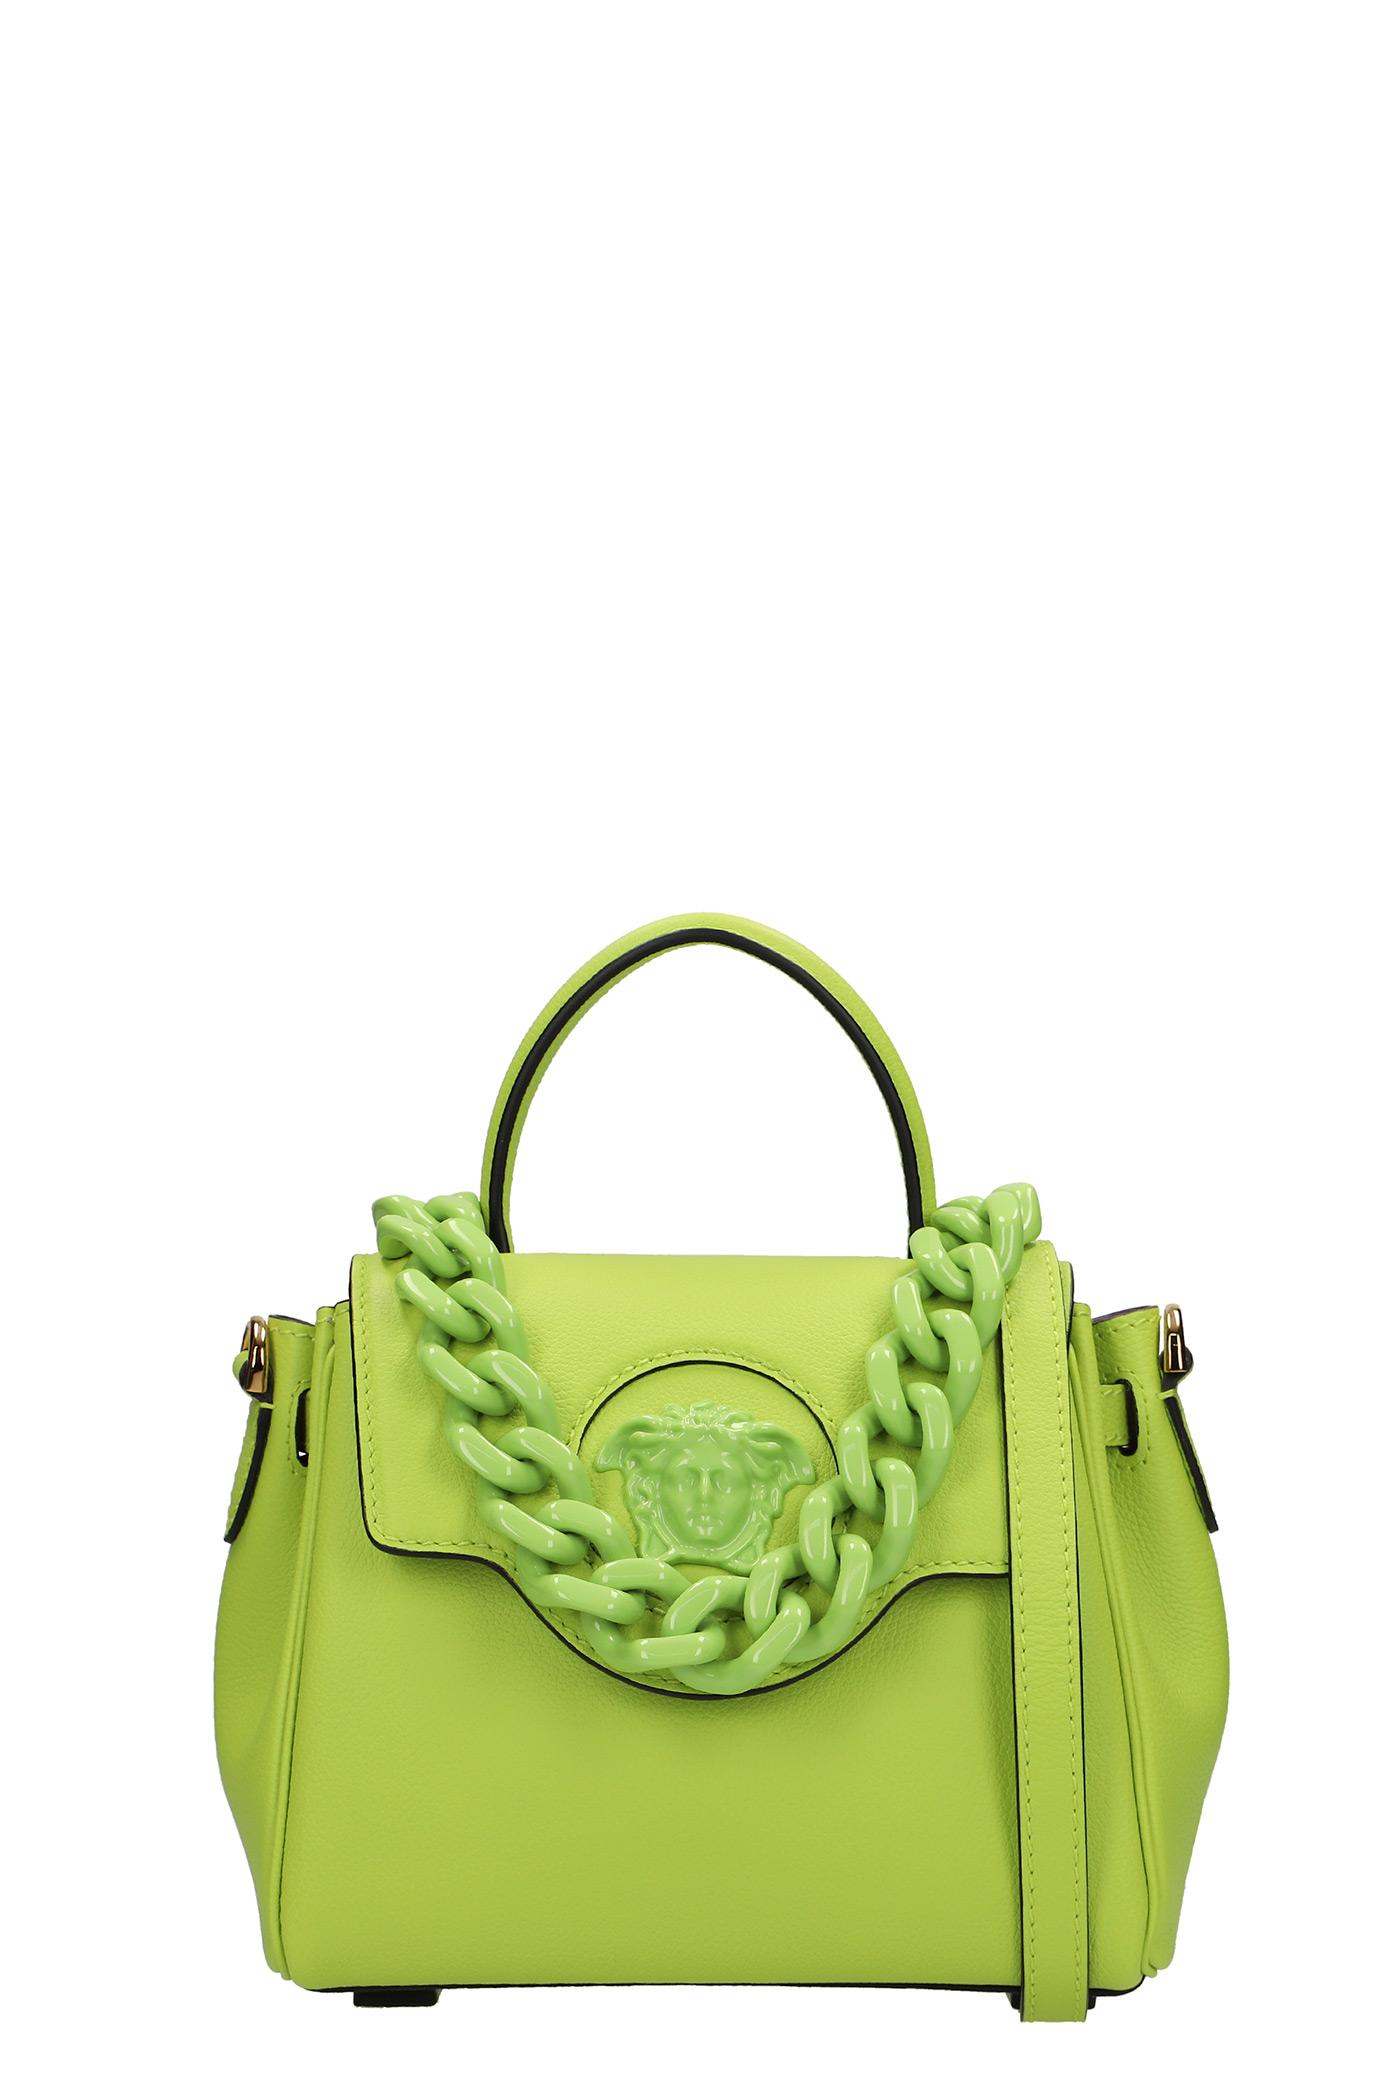 Versace La Medusa Hand Bag In Green Leather | Lyst